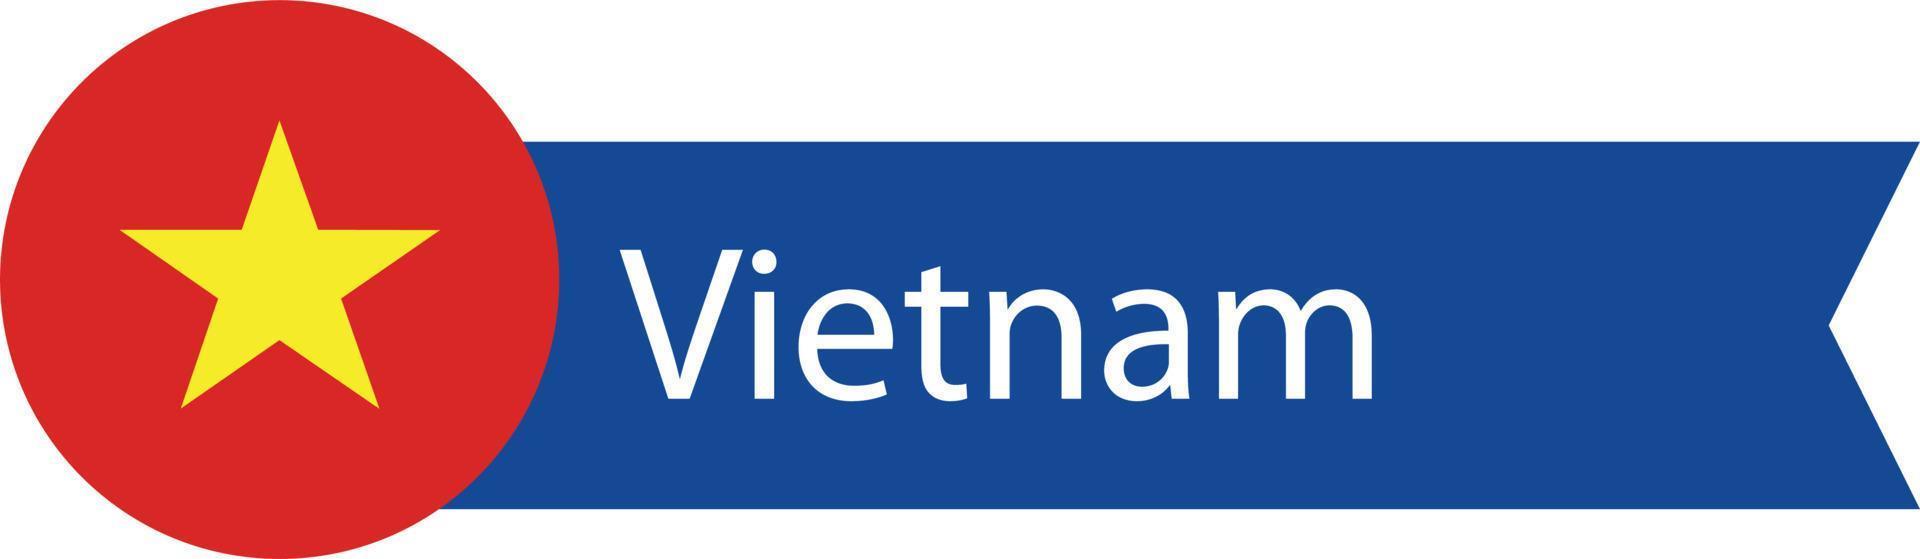 vietnam flagga symbol vektor